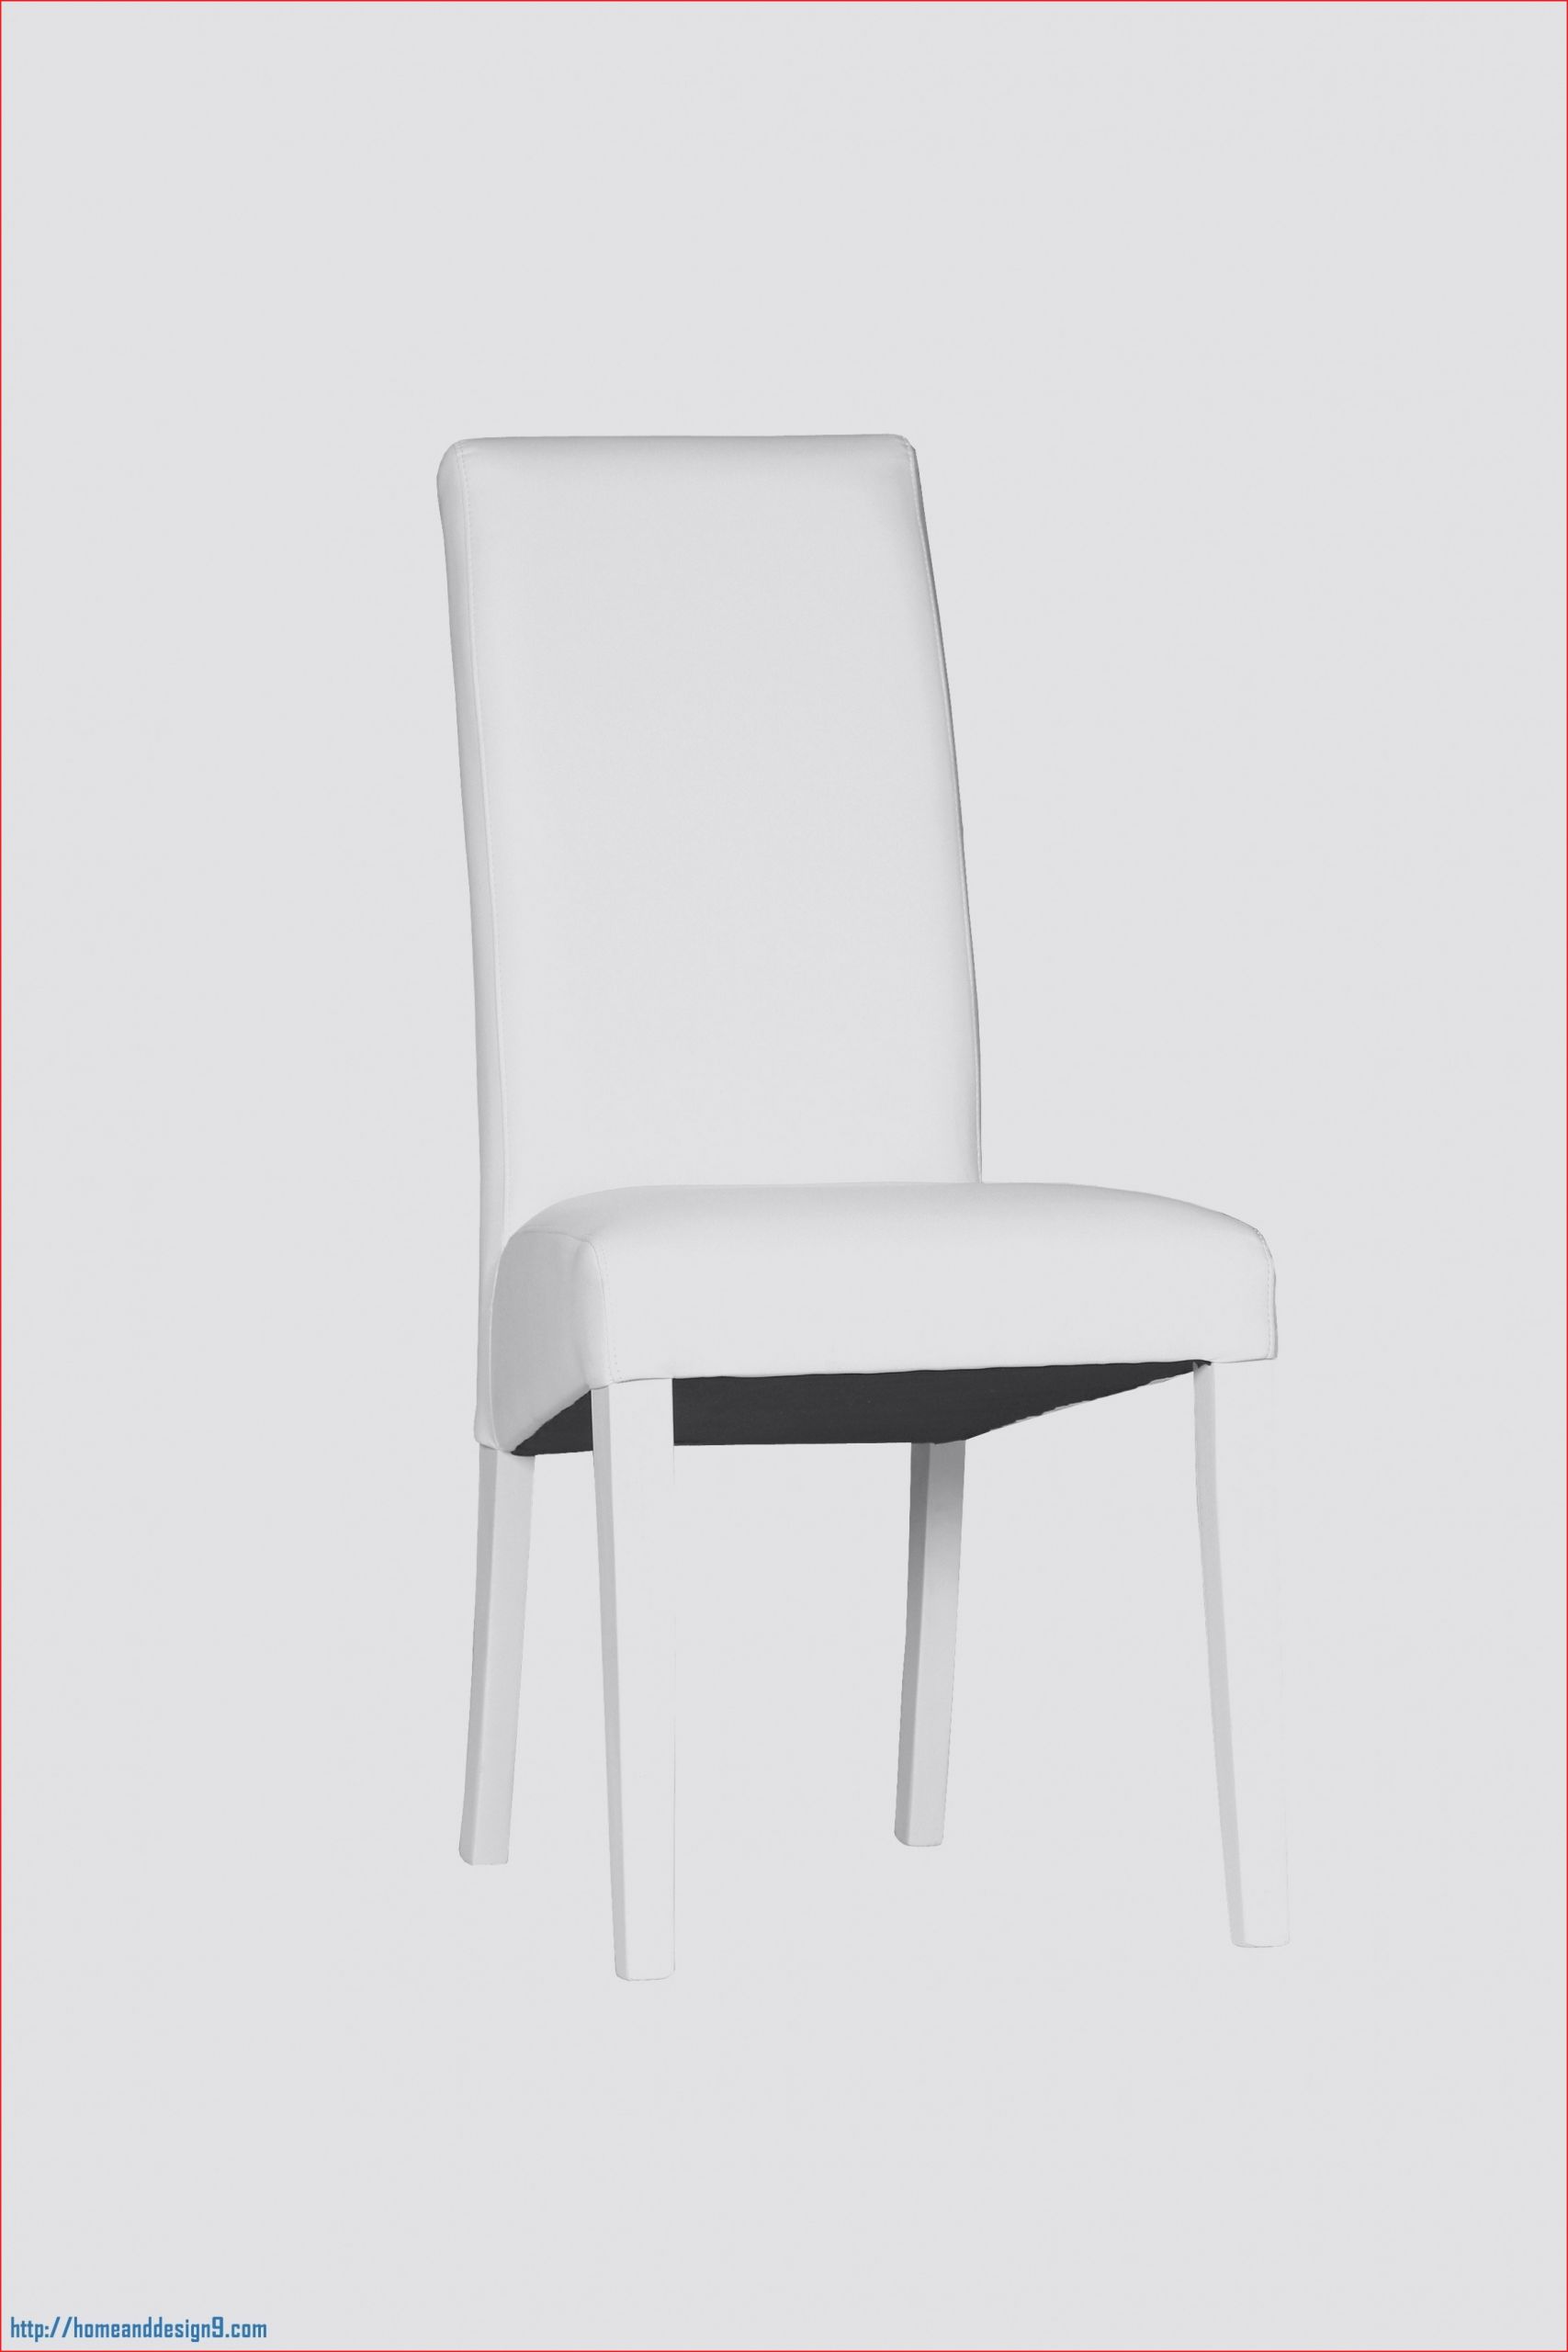 Chaise Table Luxe Génial Chaise Disign Galerie De Chaise Idée 2019